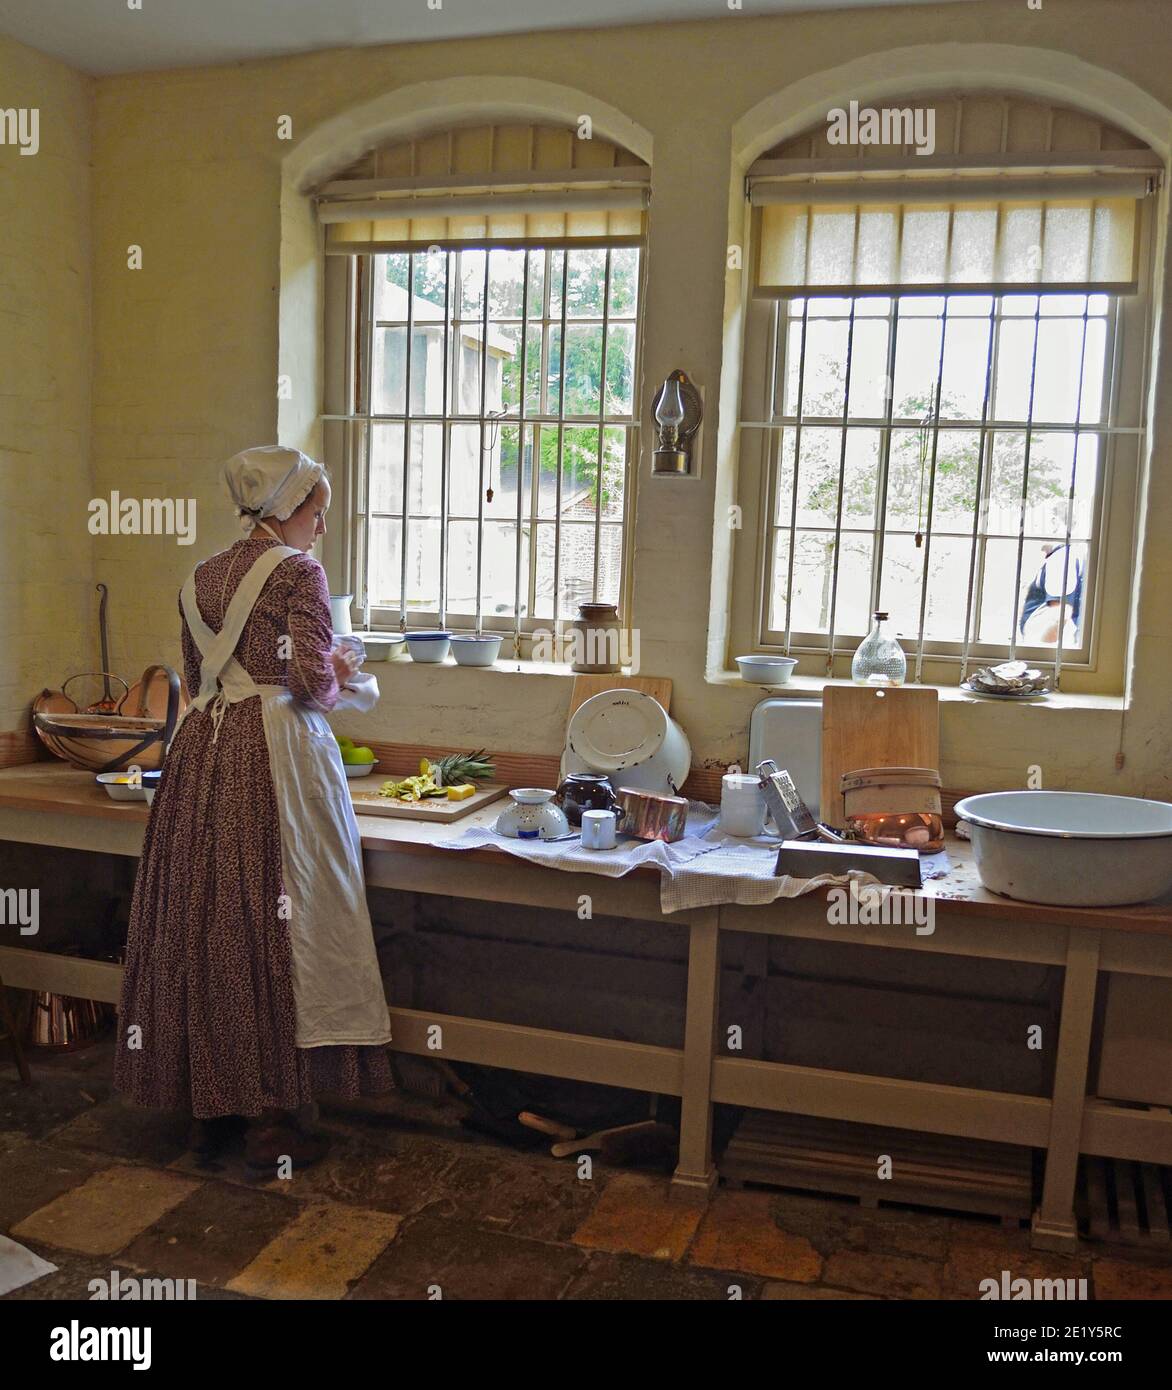 https://c8.alamy.com/comp/2E1Y5RC/victorian-kitchen-maid-preparing-food-by-window-2E1Y5RC.jpg